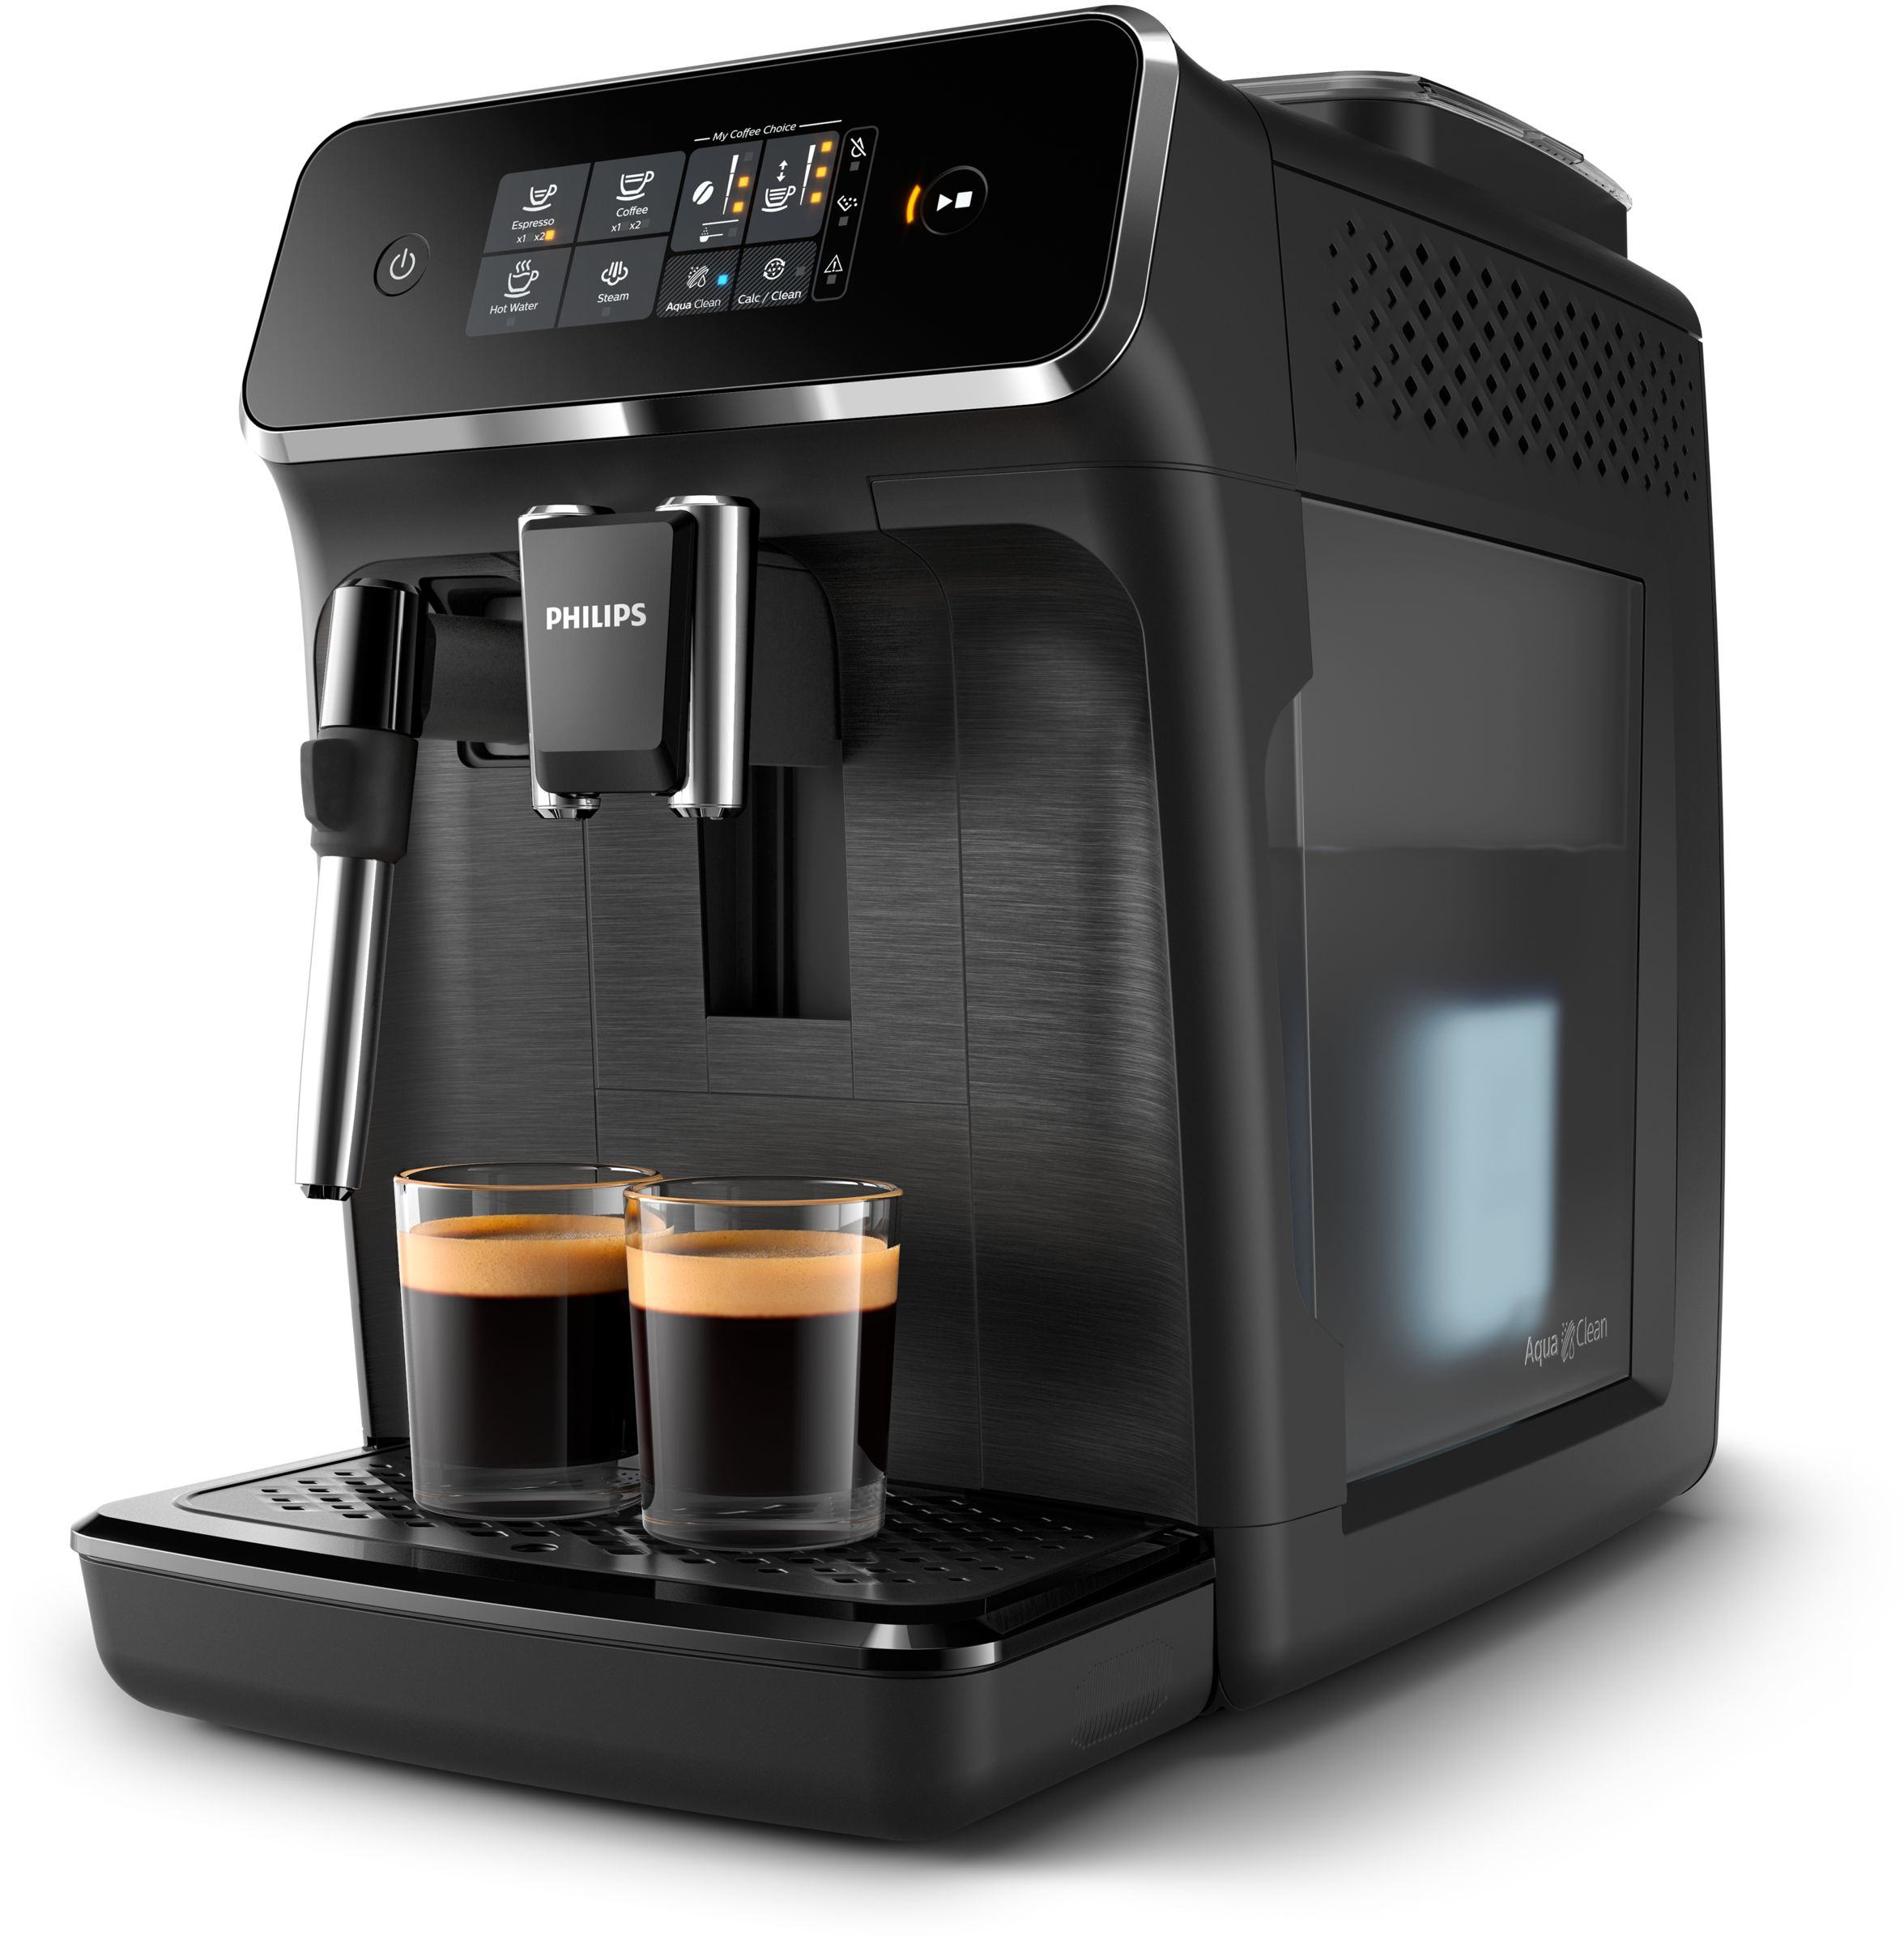 Philips Series 2200 EP2220/12 coffee maker